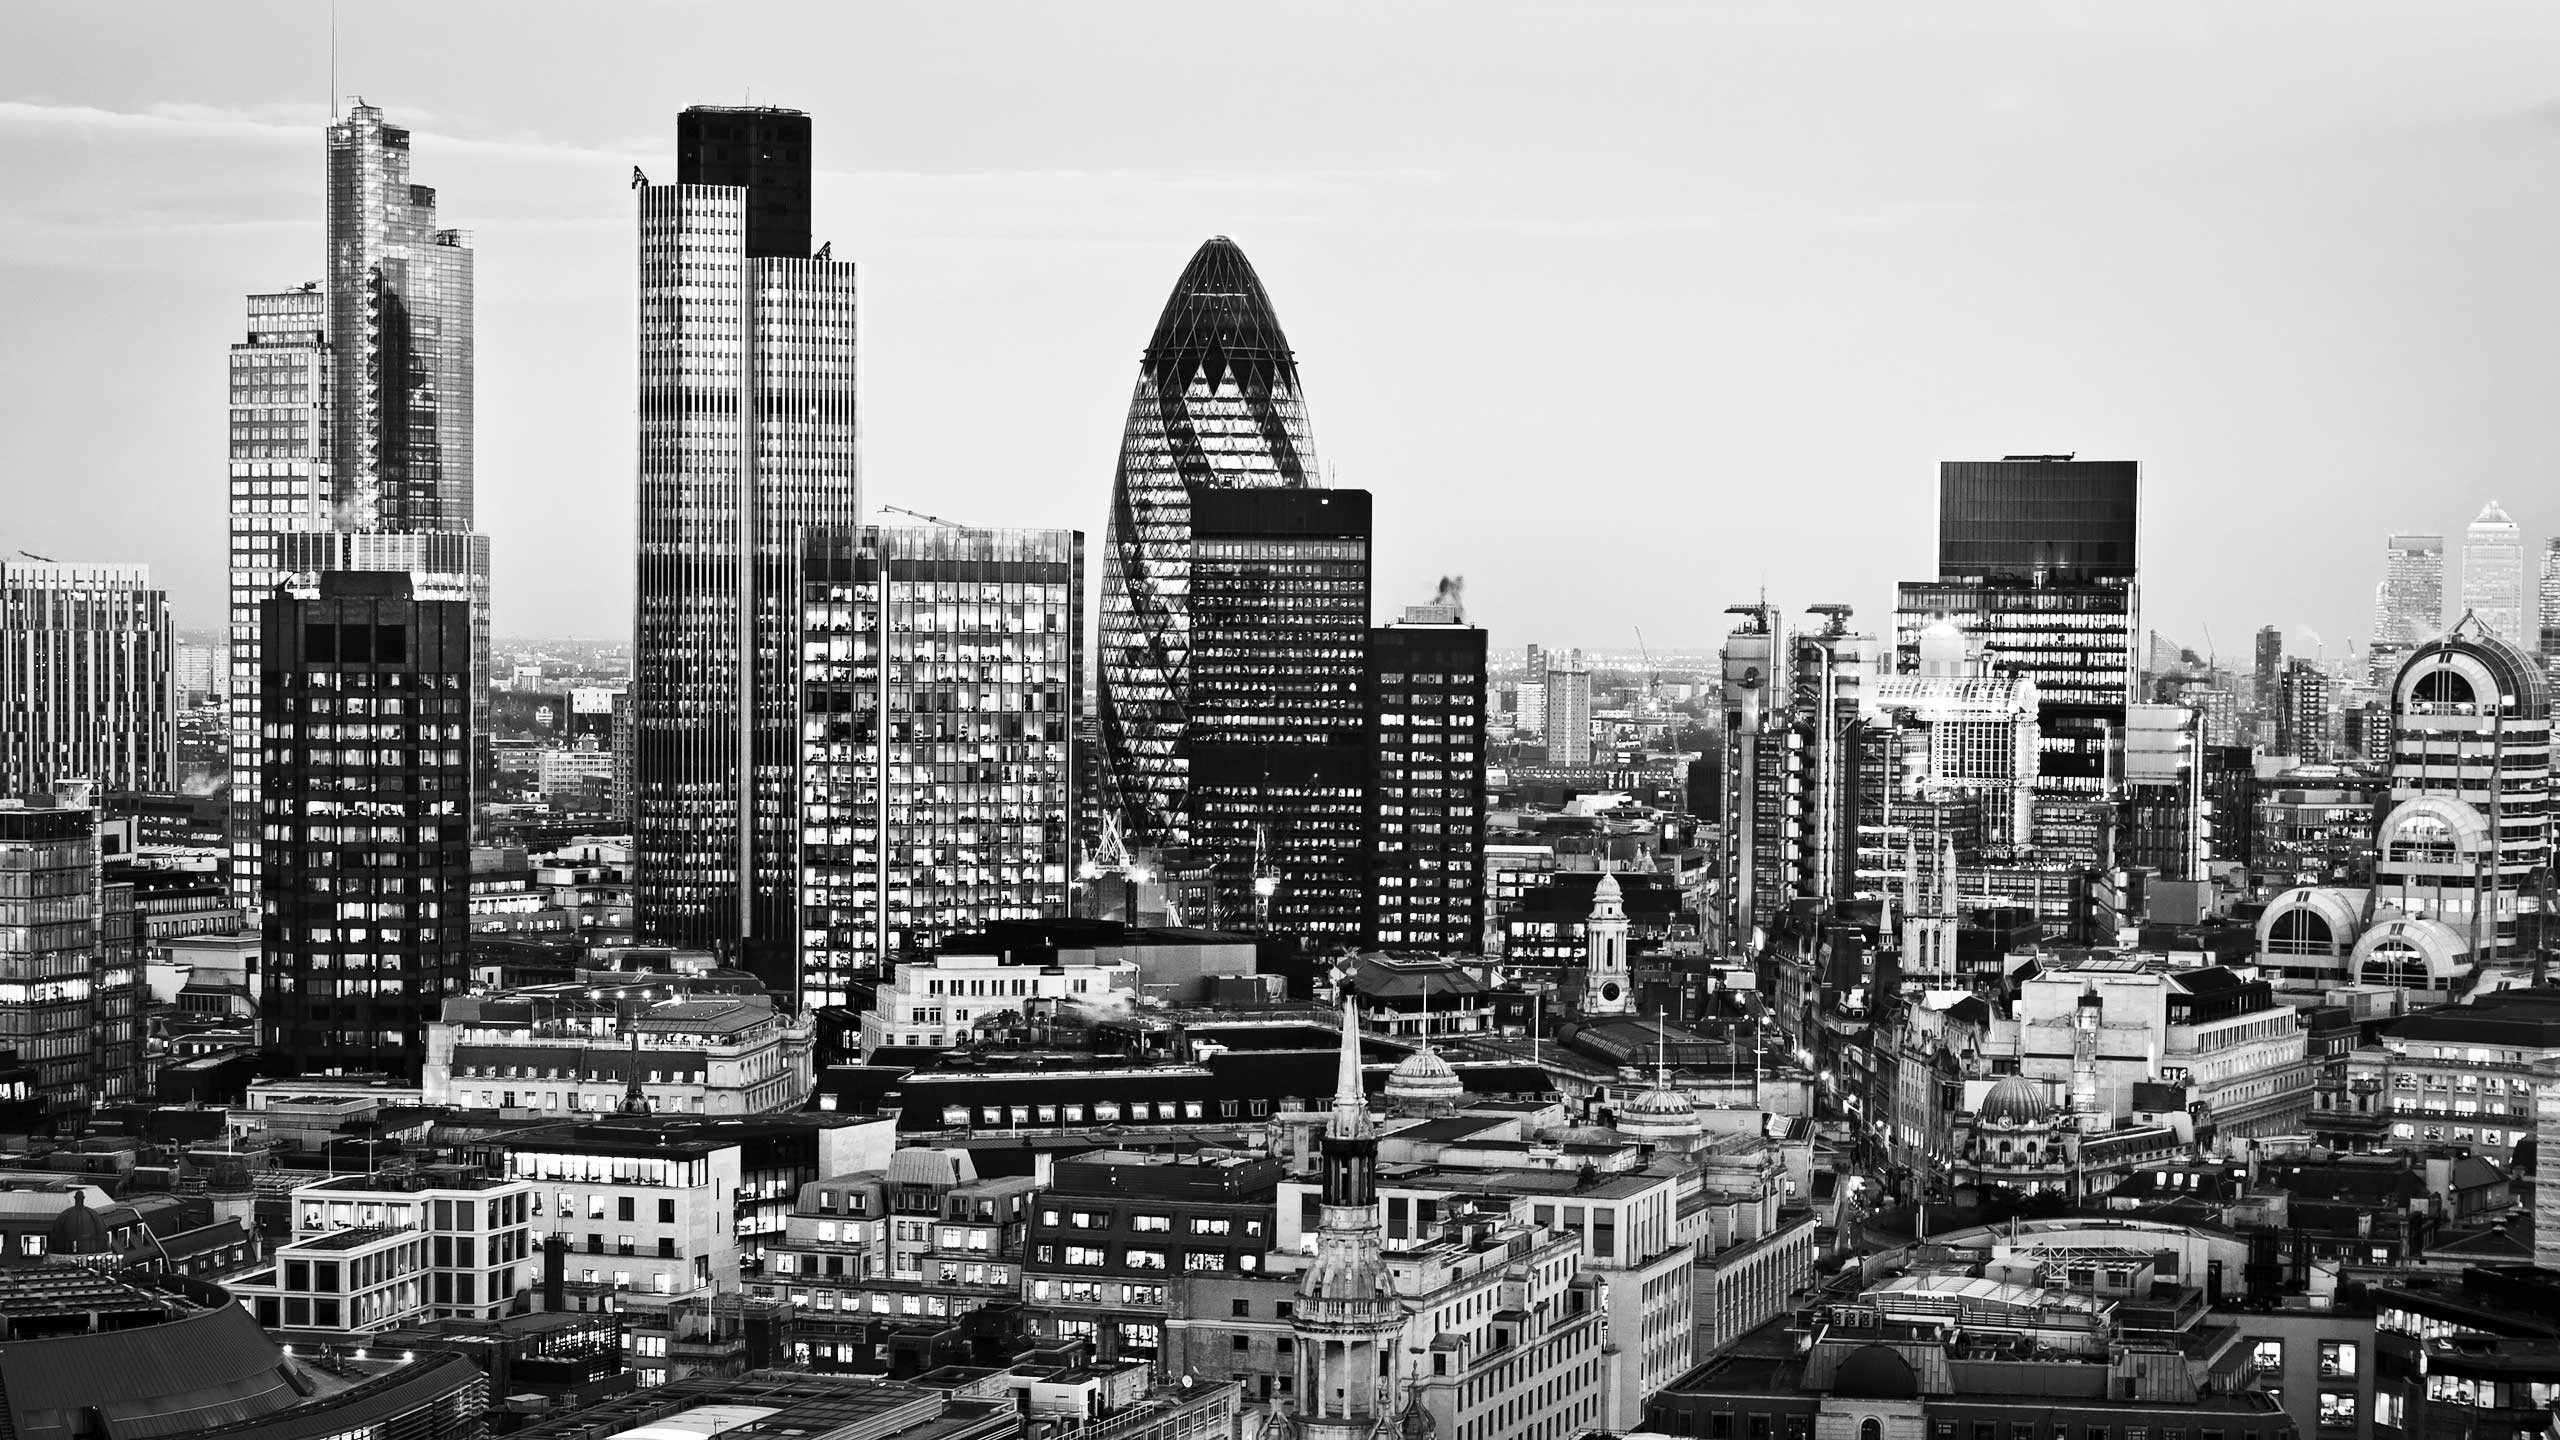 City Of London Insurance - 2560x1440 Wallpaper 